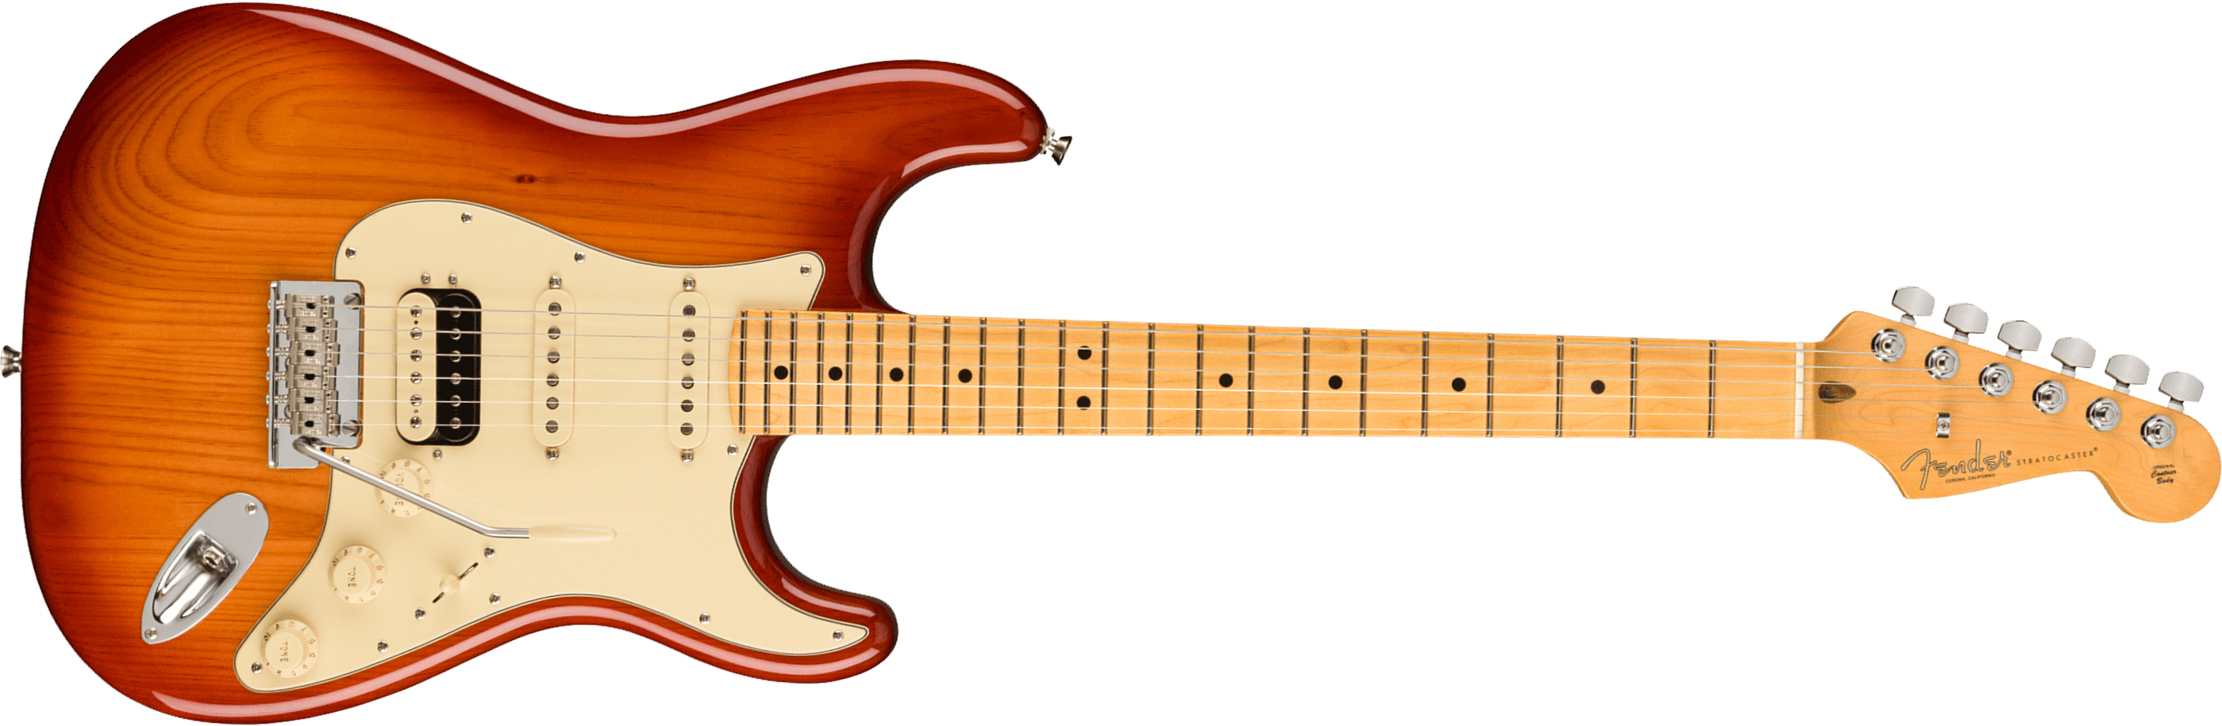 Fender Strat American Professional Ii Hss Usa Mn - Sienna Sunburst - Guitare Électrique Forme Str - Main picture